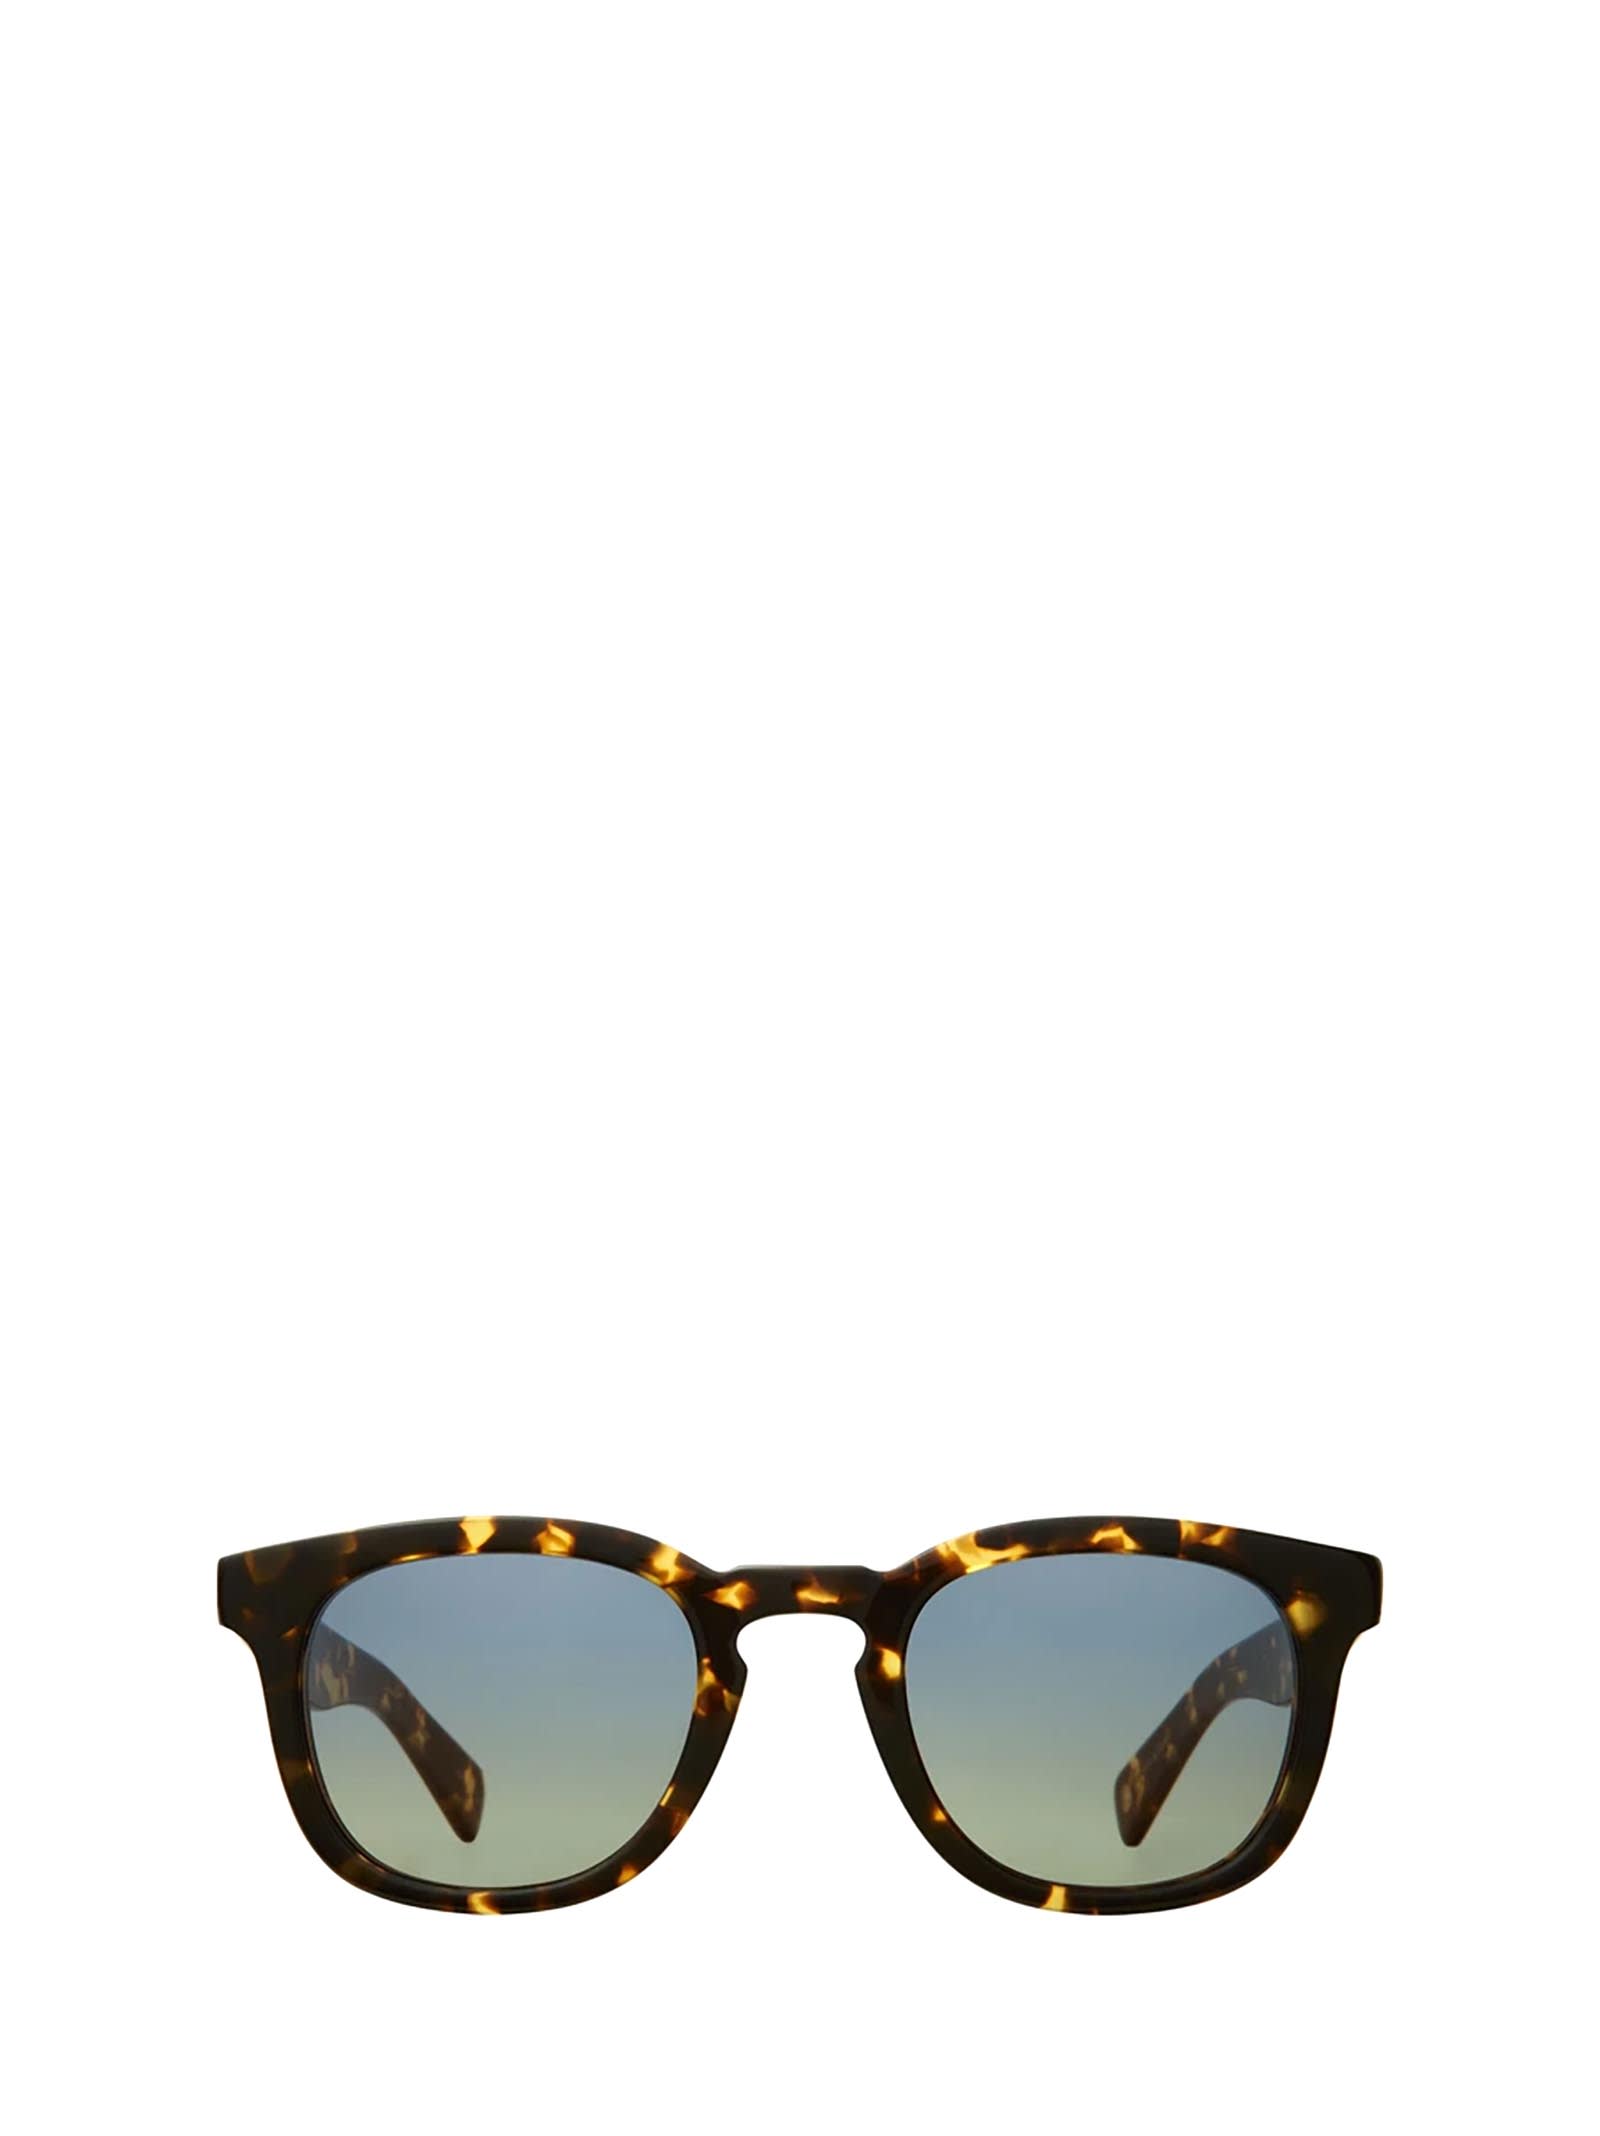 Kinney X Sun Tuscan Tortoise Sunglasses